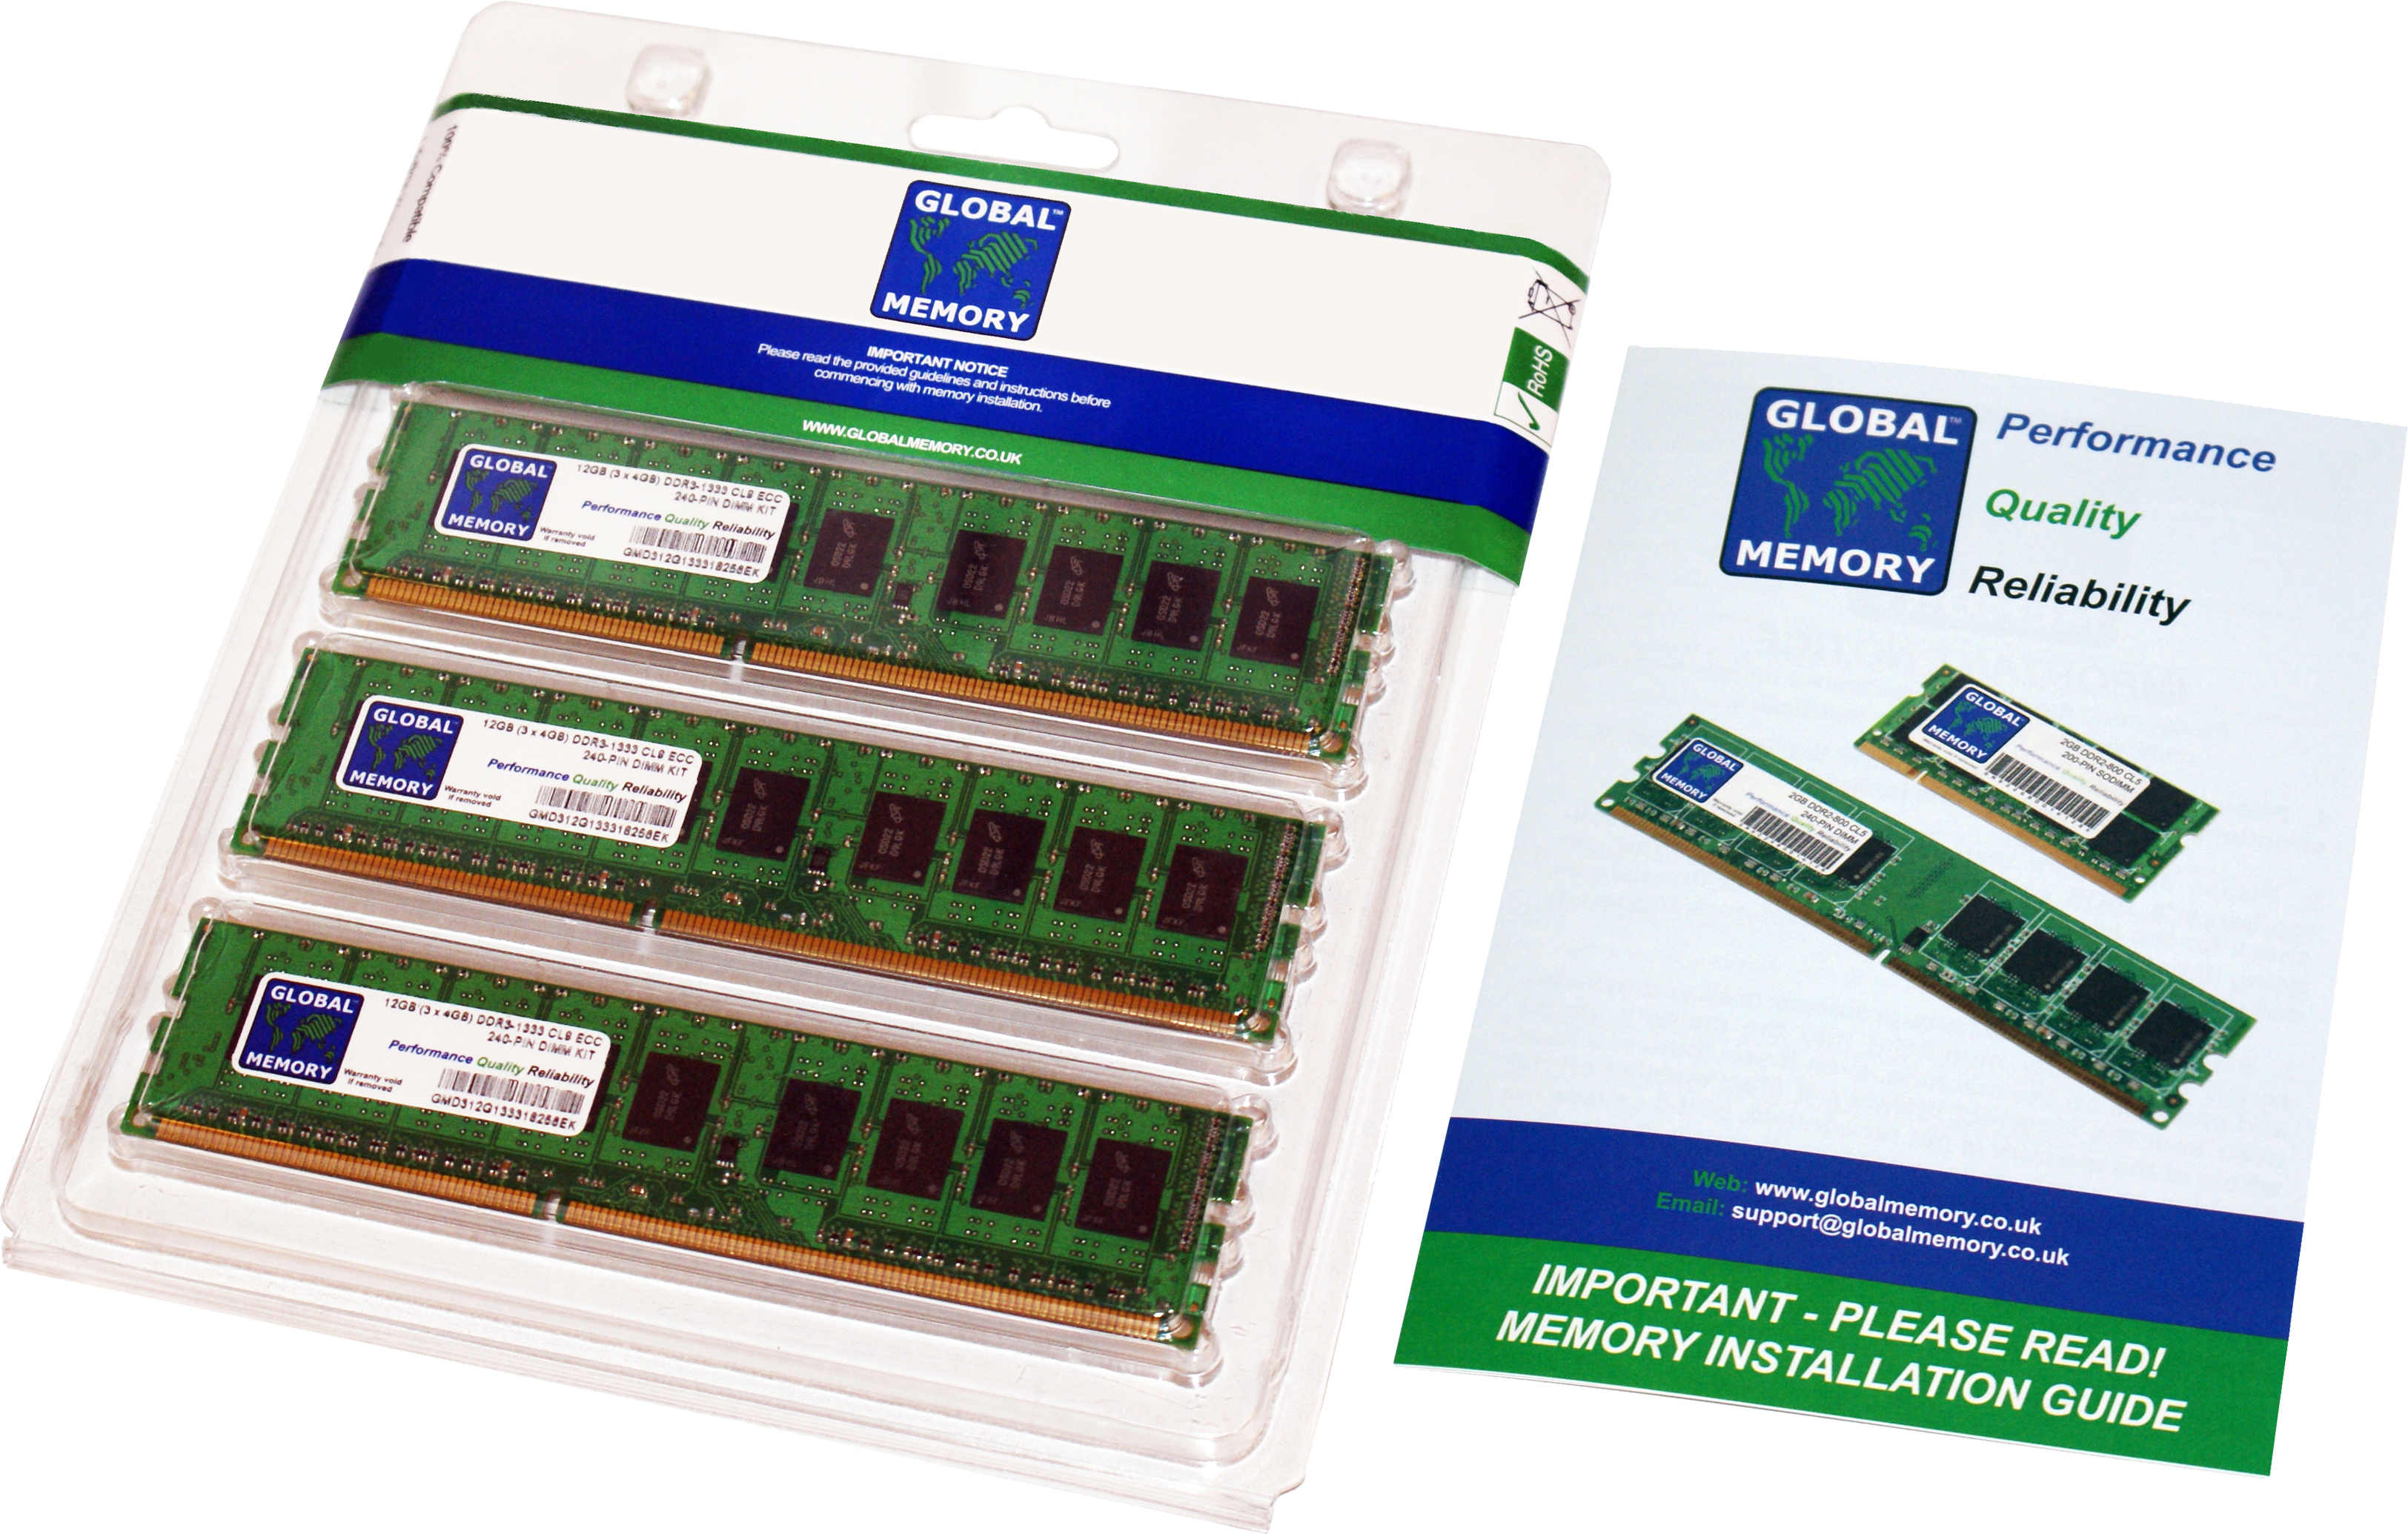 24GB (3 x 8GB) DDR3 1866MHz PC3-14900 240-PIN ECC DIMM (UDIMM) MEMORY RAM KIT FOR DELL SERVERS/WORKSTATIONS